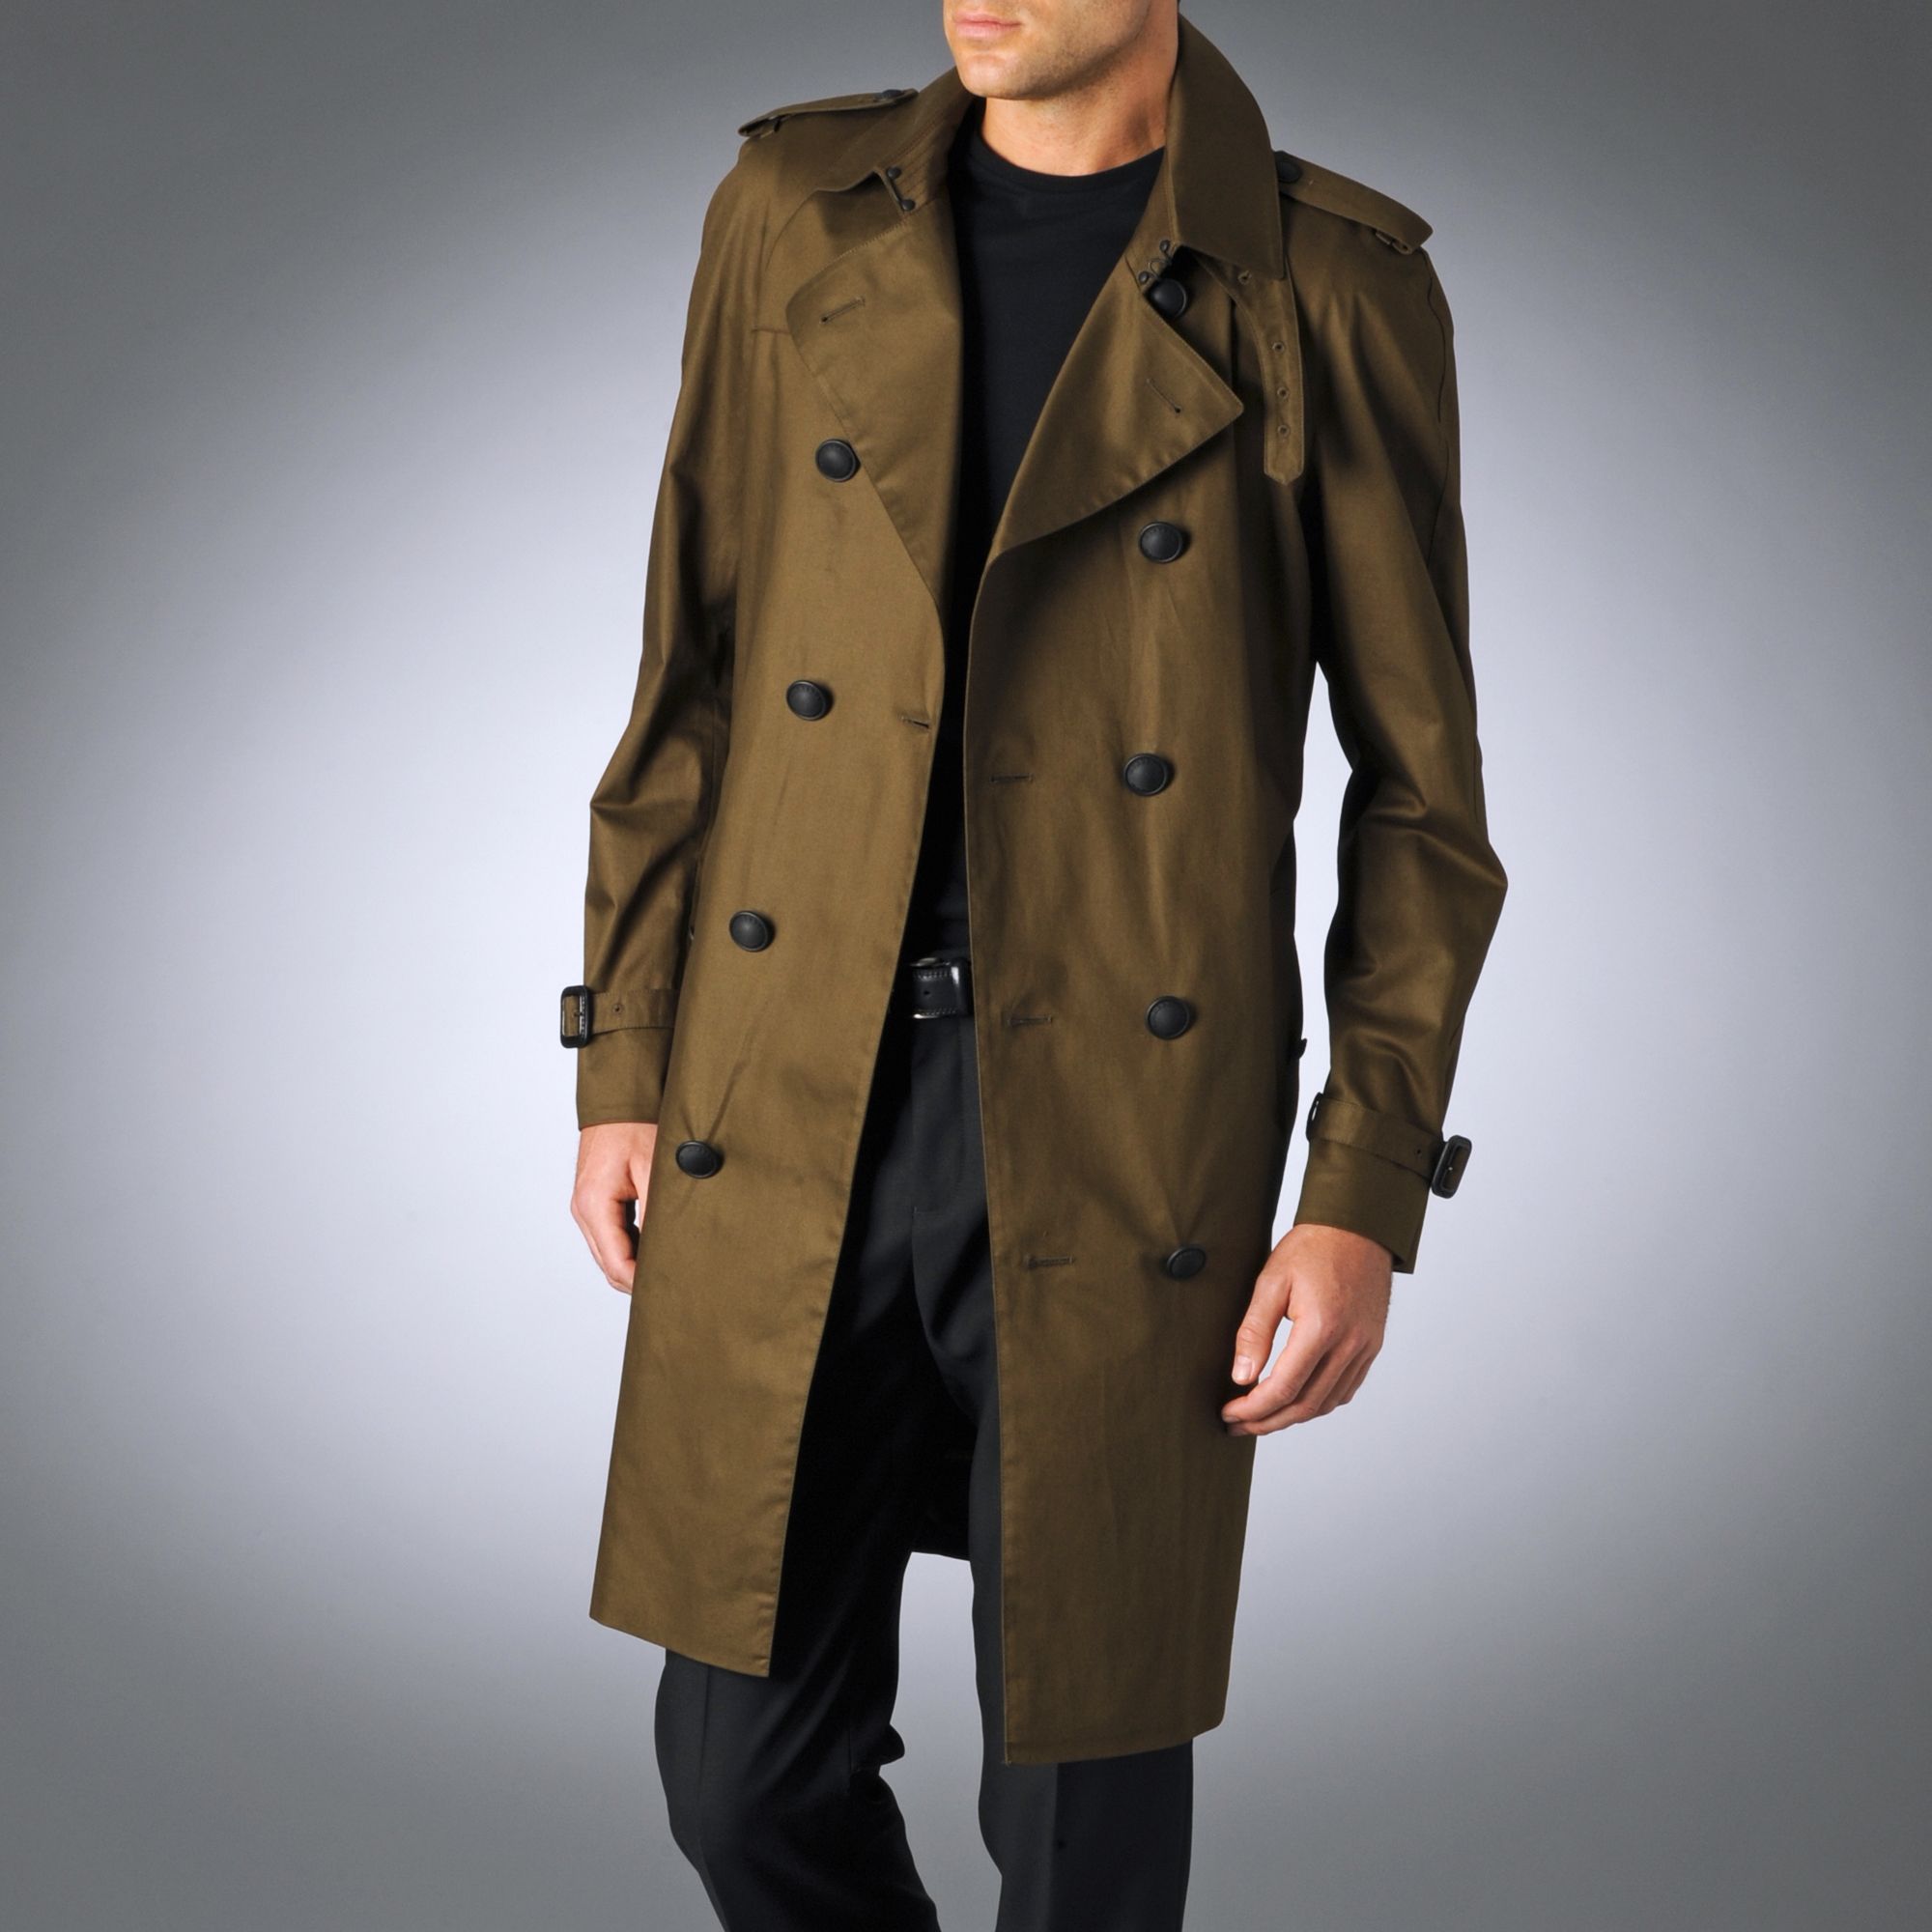 Burberry Prorsum Trench Coat Mens Flash Sales, SAVE 57% - eagleflair.com